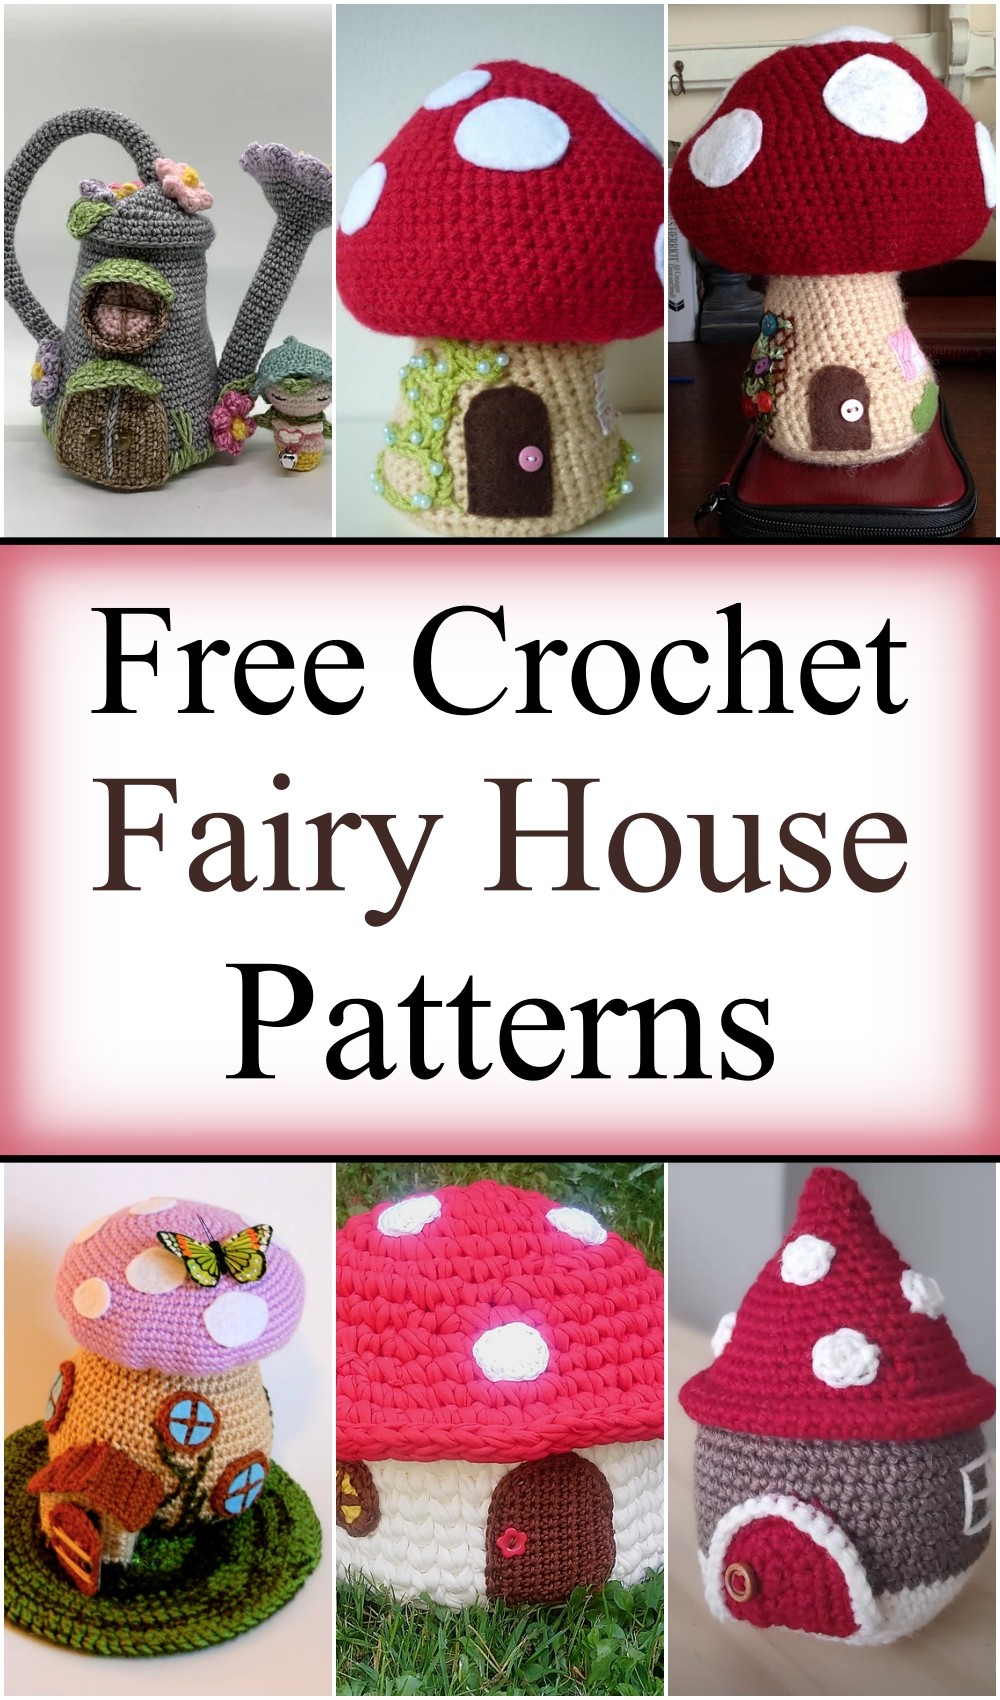  Free Crochet Fairy House Patterns